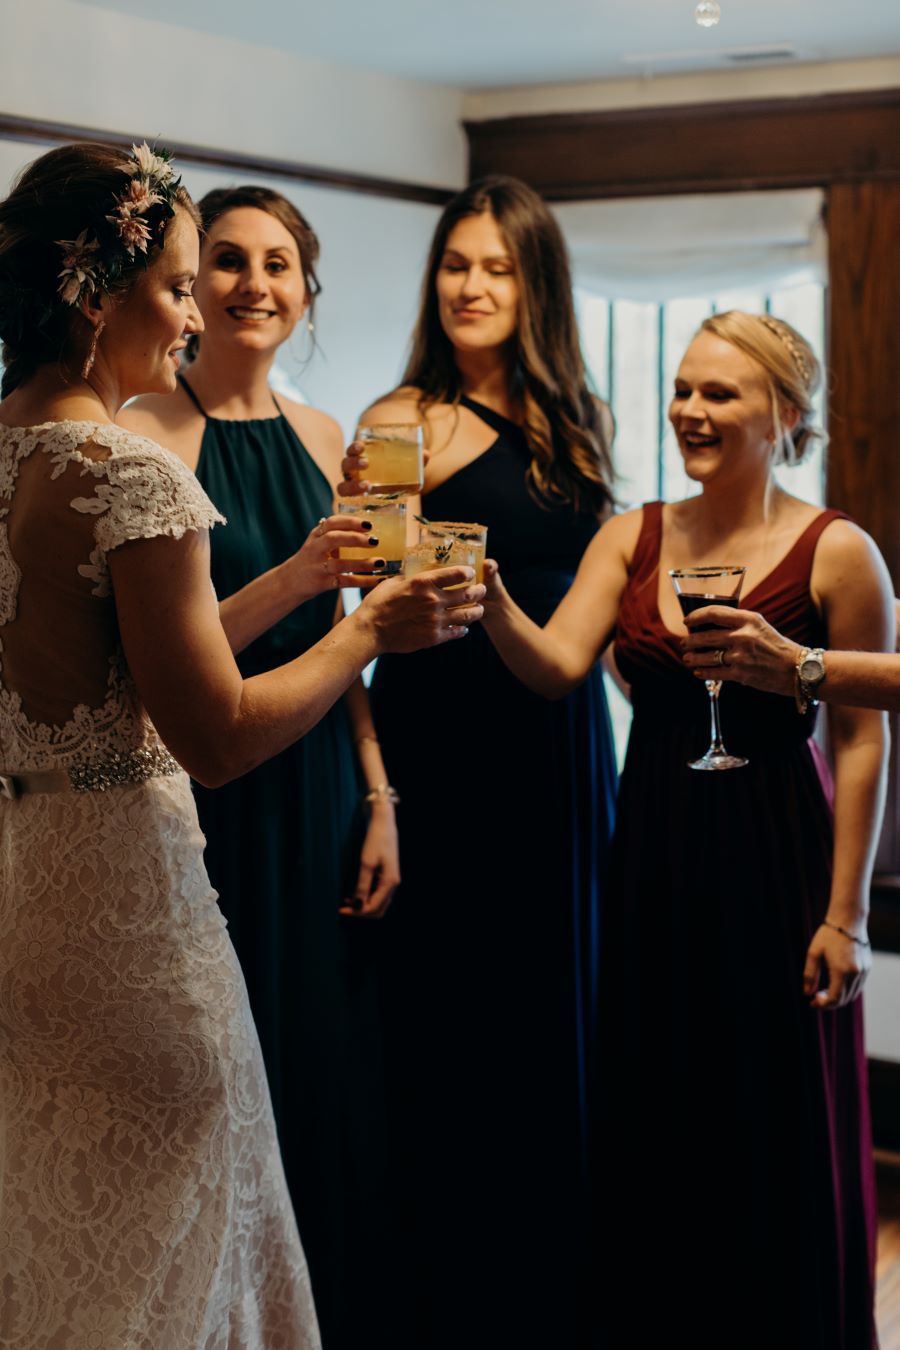 Bridal party cheersing in bridal suite before wedding / earthy / fall / October / burgundy